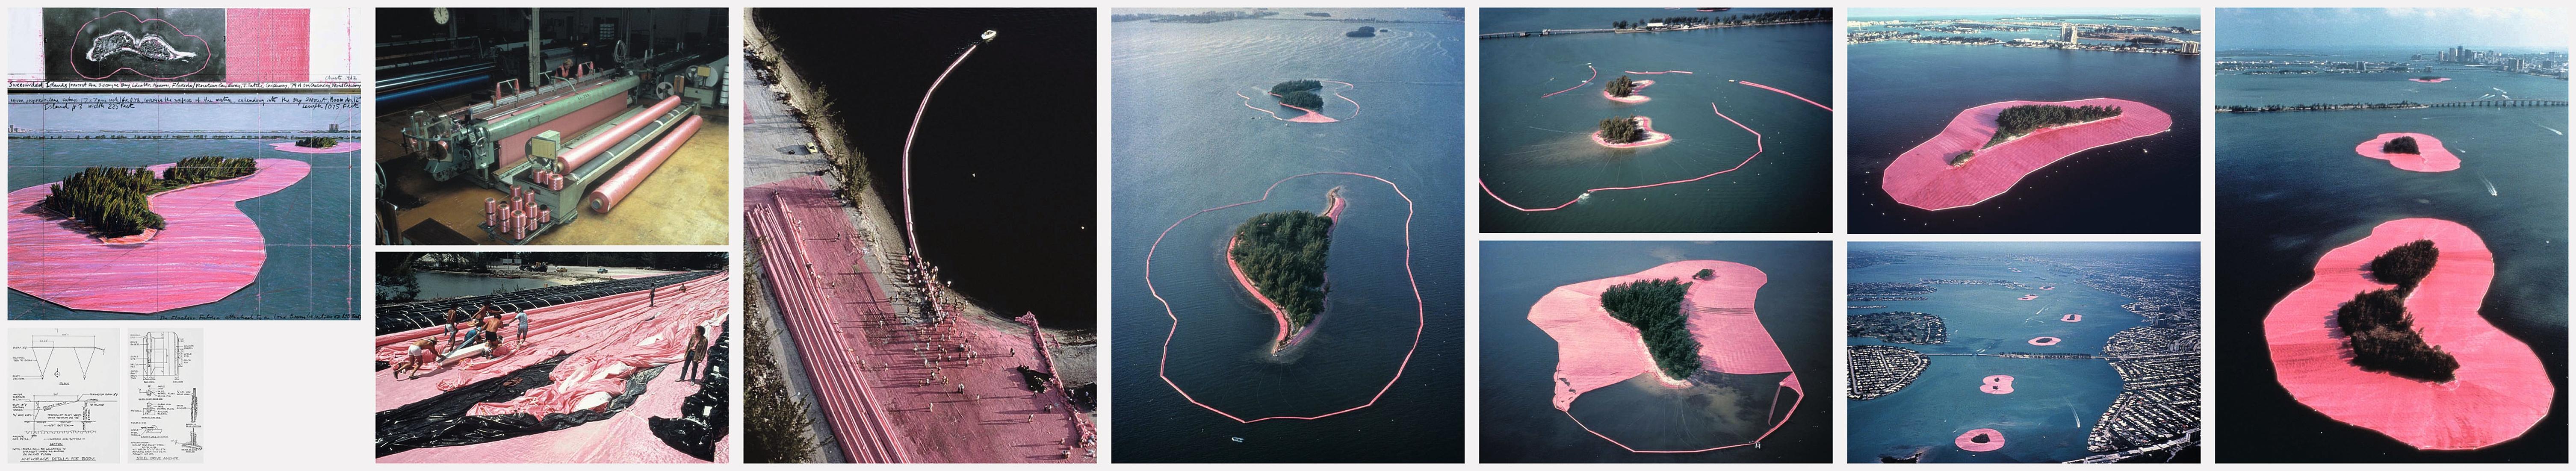 Christo and Jeanne-Claude Figurative Print - Surrounded Islands, Leporello, Concept Artist, Land Art, Contemporary Art